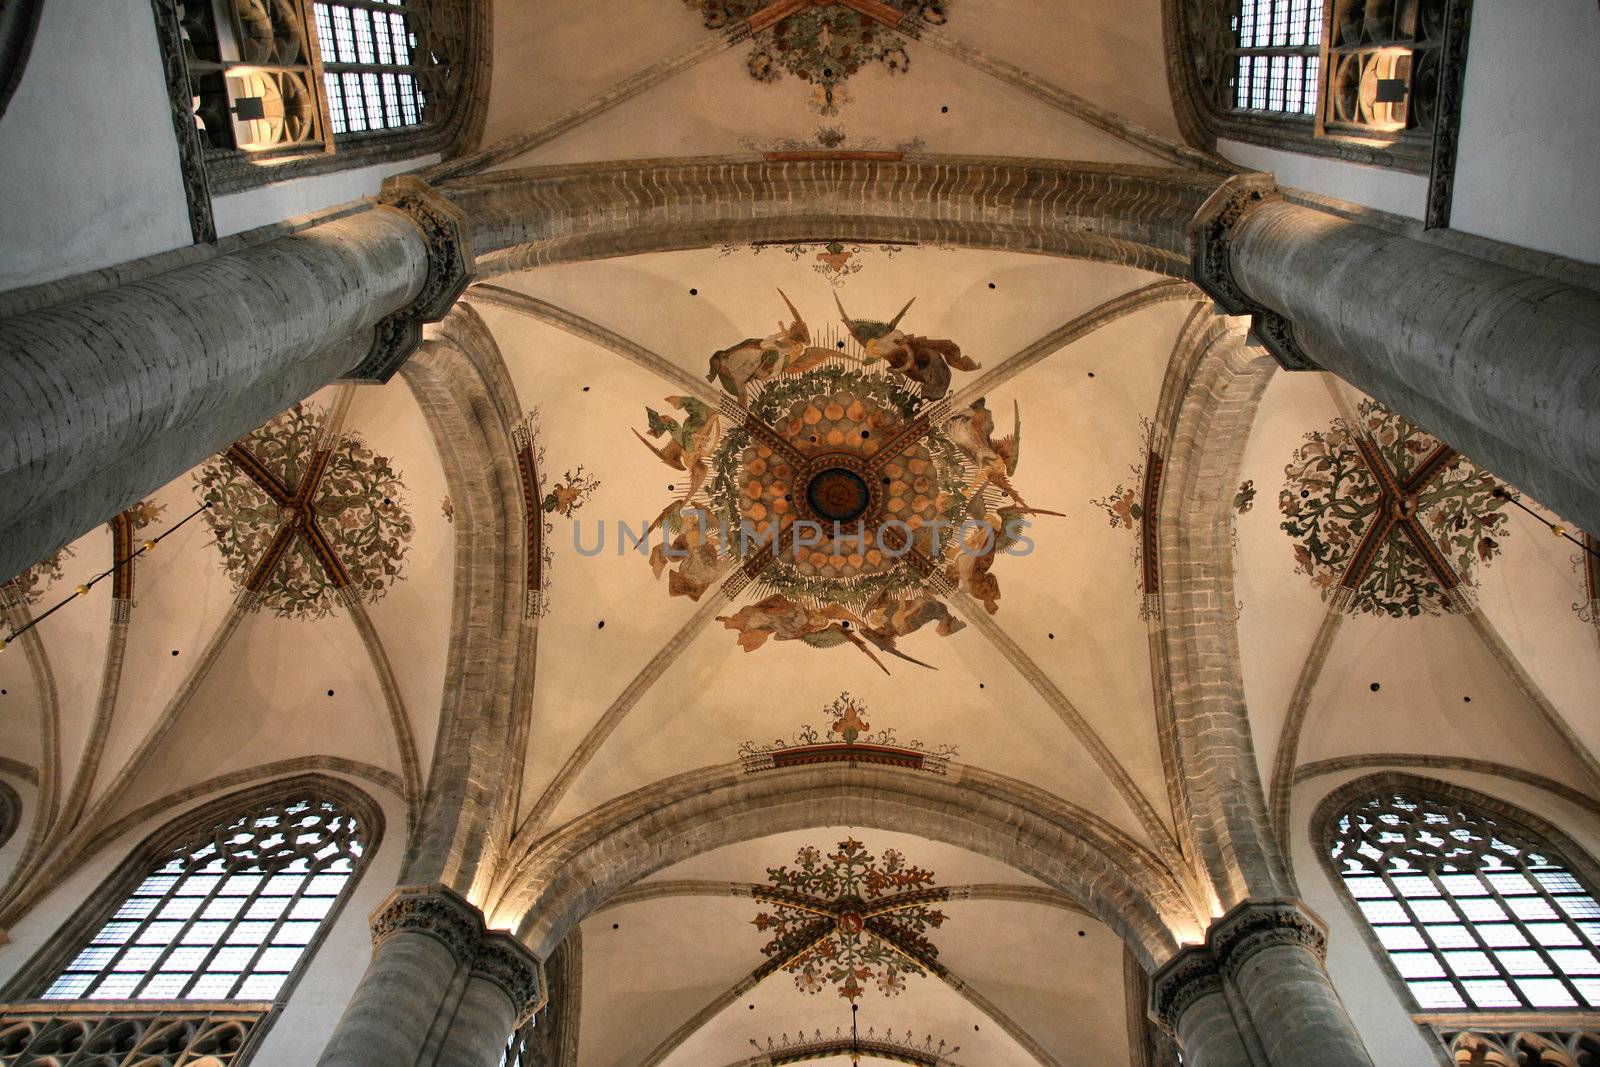 Grote Kerk - Grand Church in Breda, Netherlands. Beautiful ceiling. Brabantine gothic style.